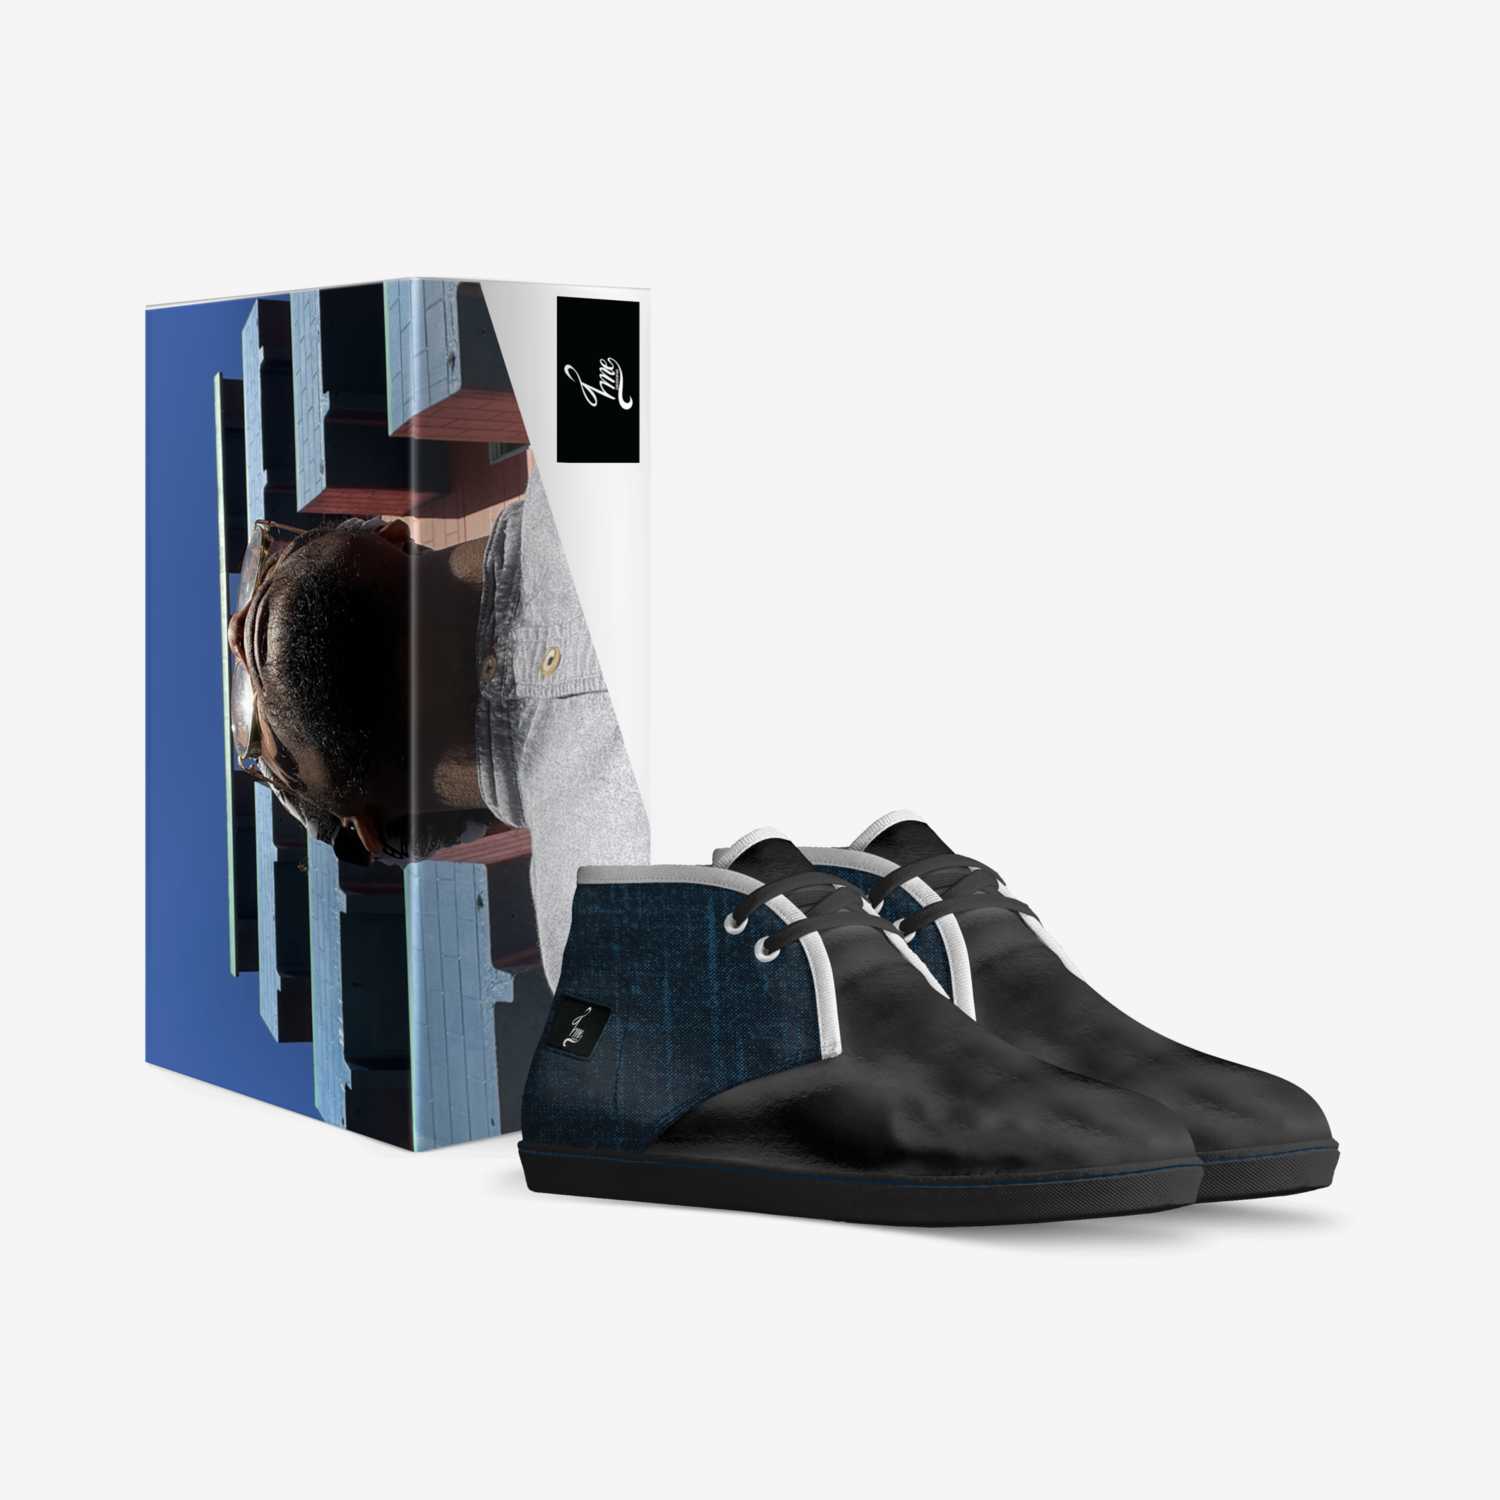 OTOS custom made in Italy shoes by Joseph " Mr. Muzic" Melara | Box view